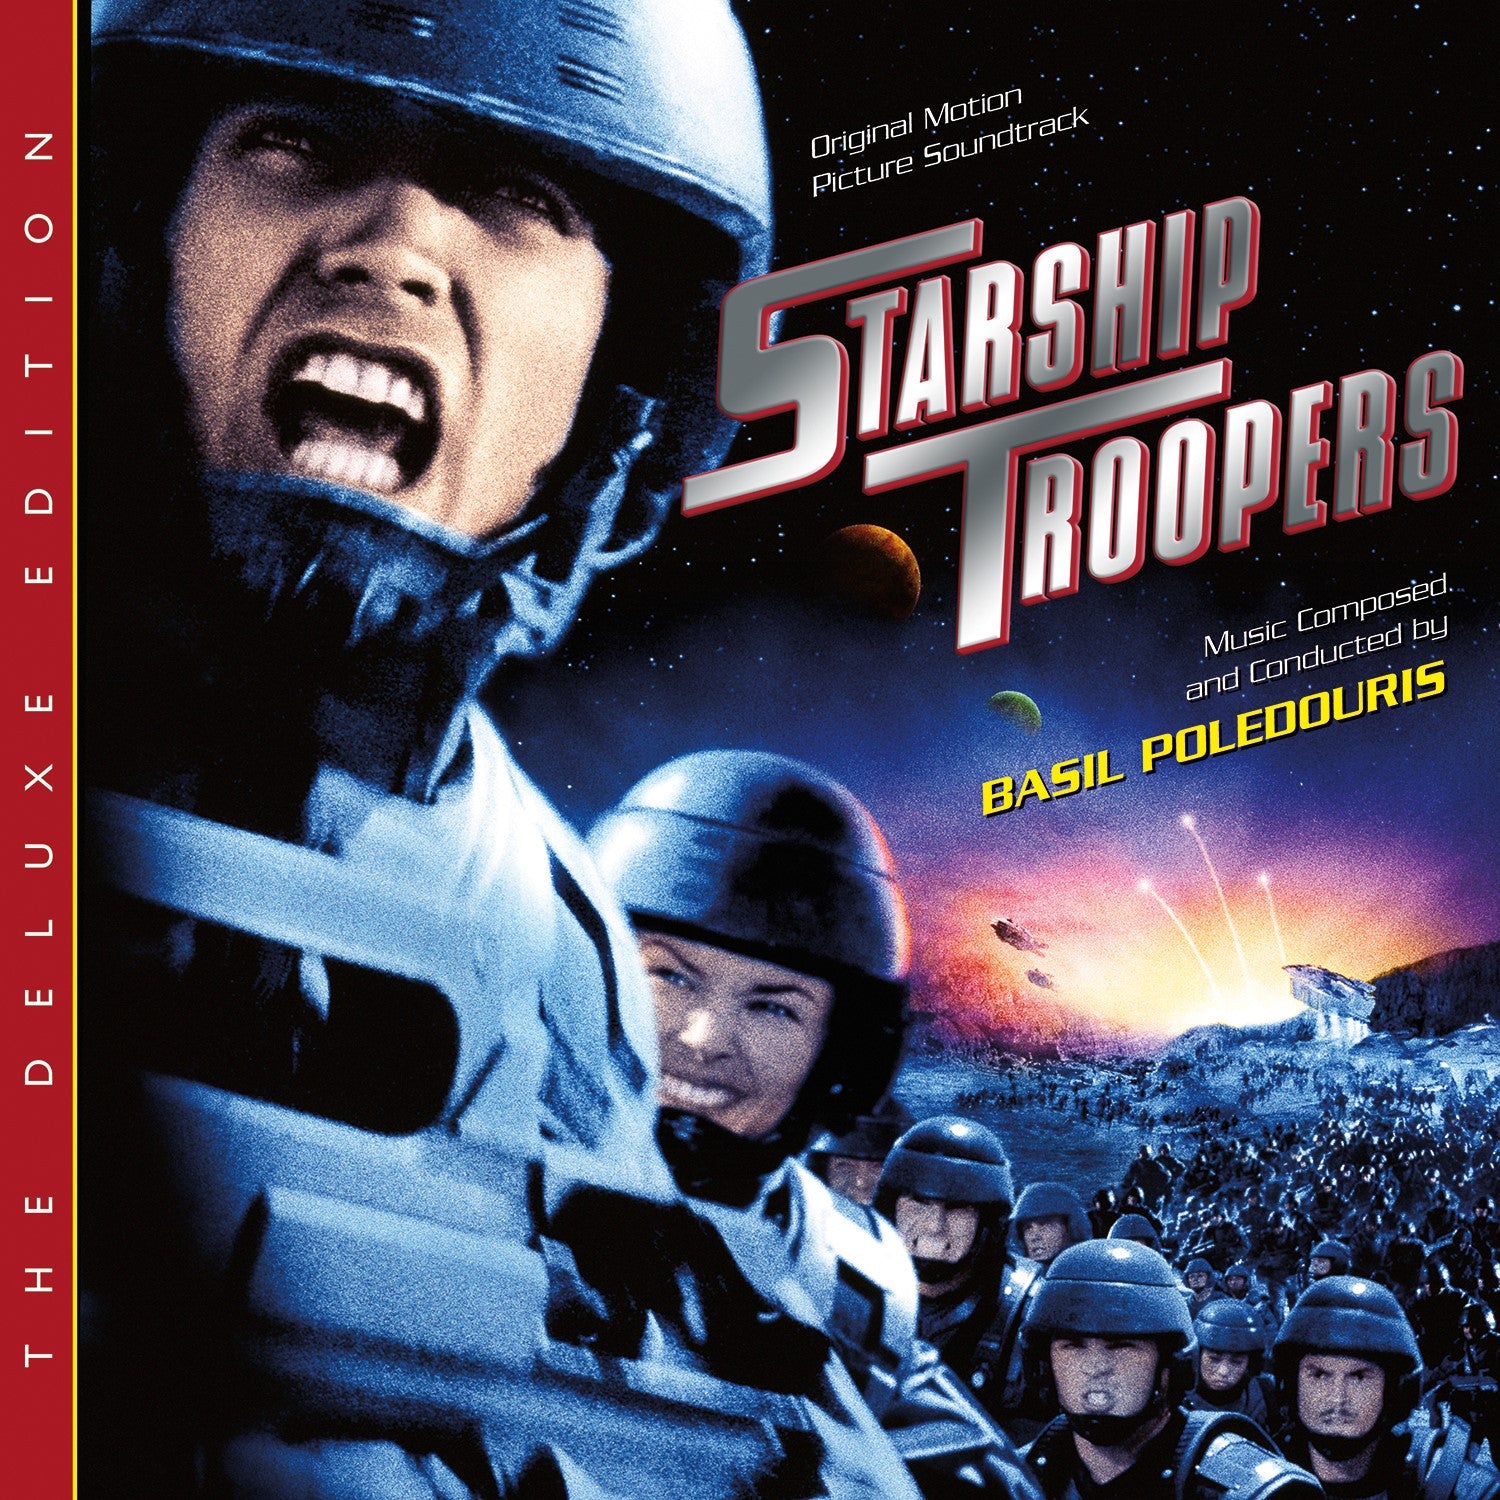 Starship_Troopers_2048x2048.jpg